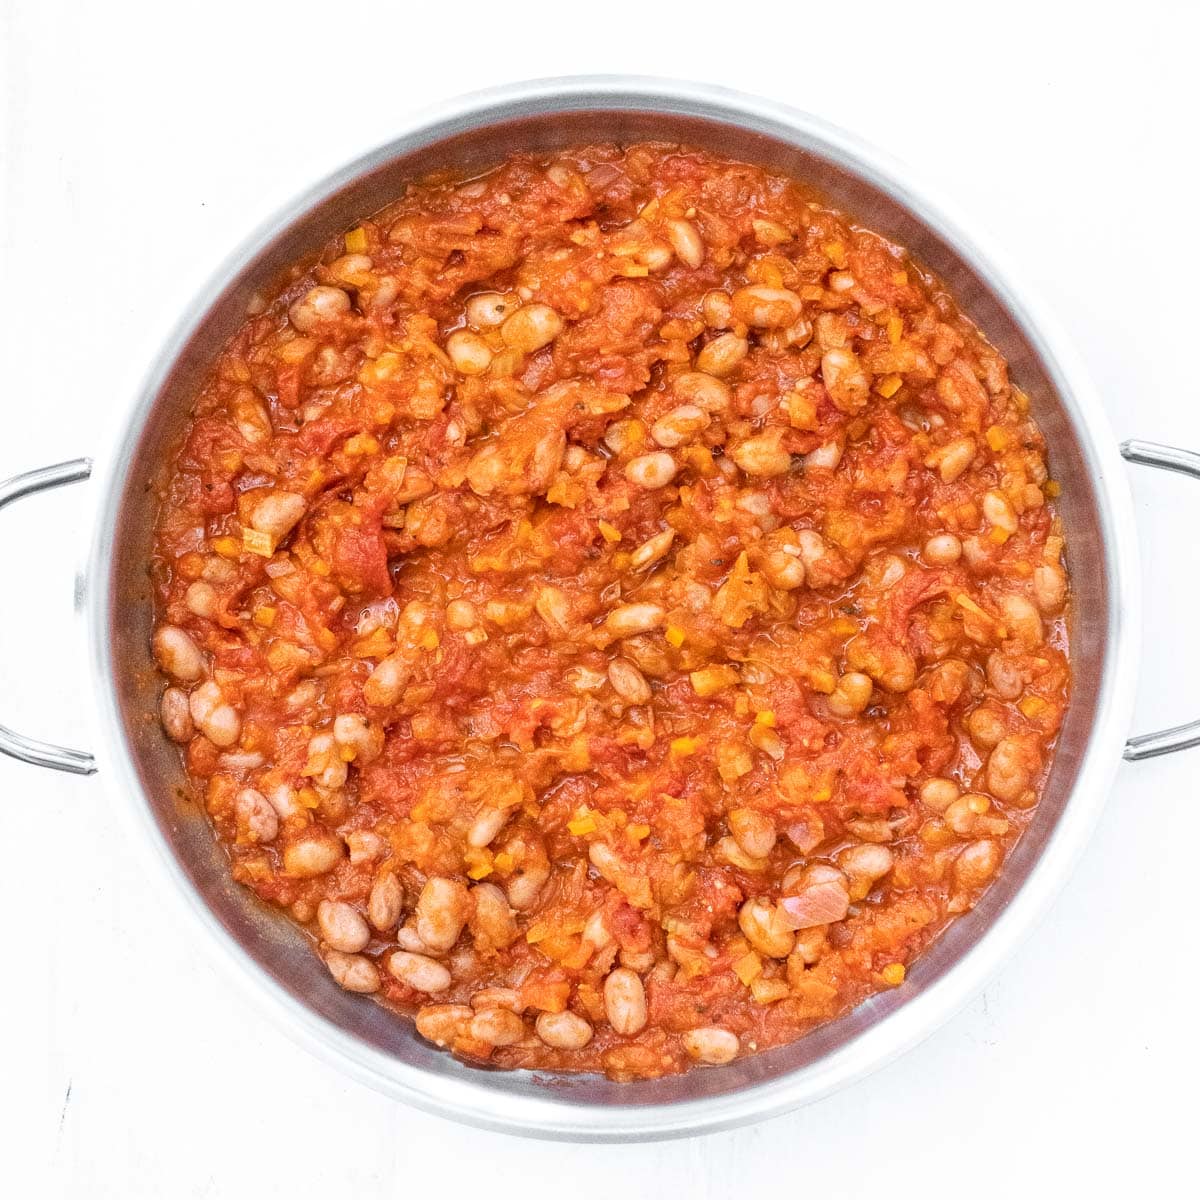 the Italian bean stew is ready